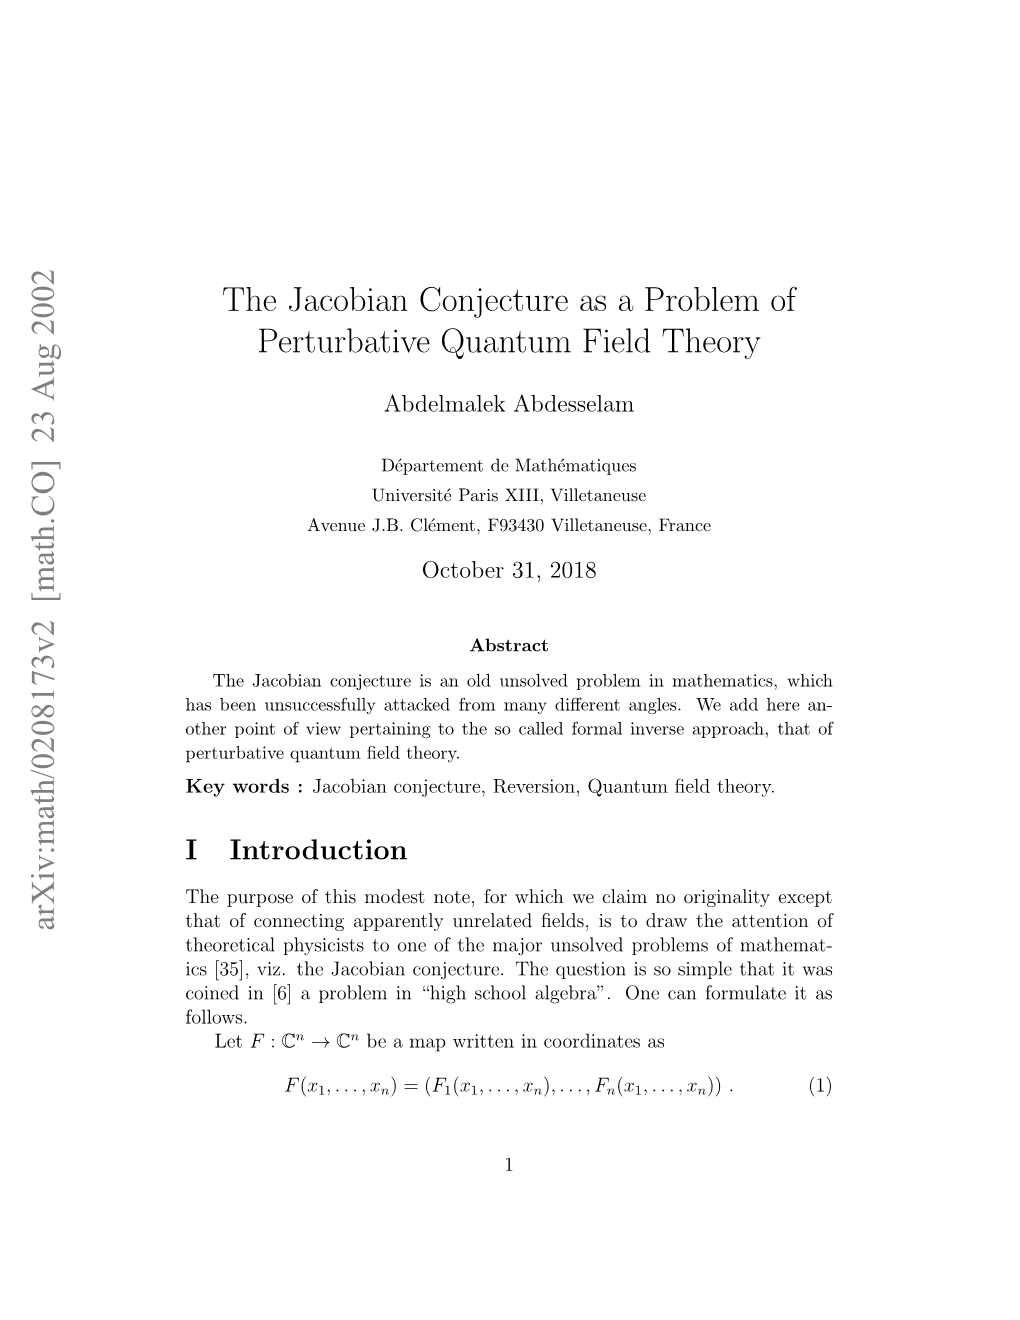 The Jacobian Conjecture As a Problem of Perturbative Quantum